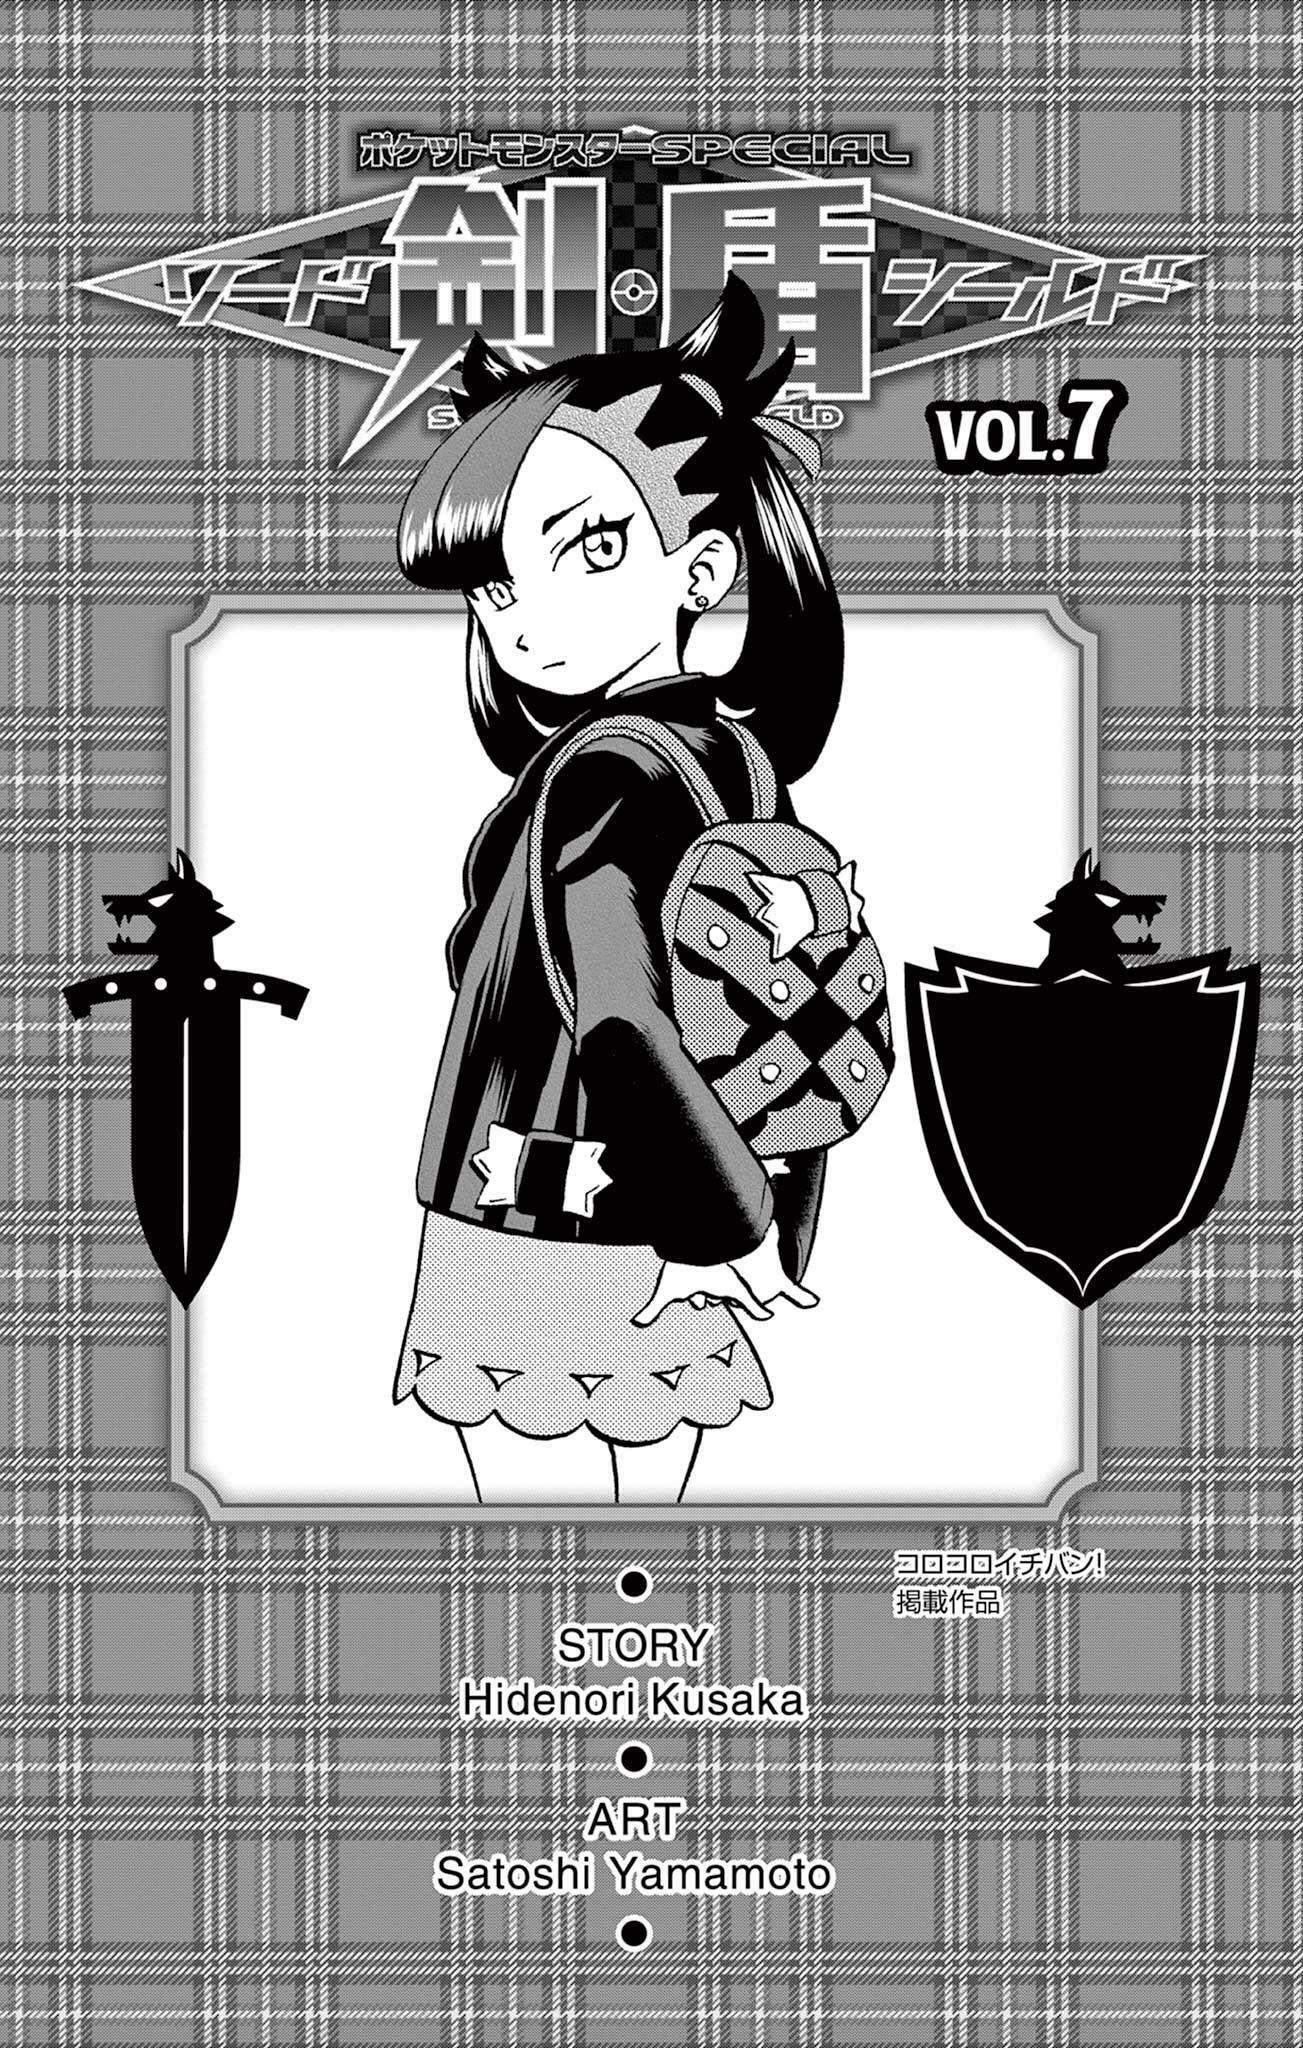 Pokemon Sword & Shield Manga Volume 7